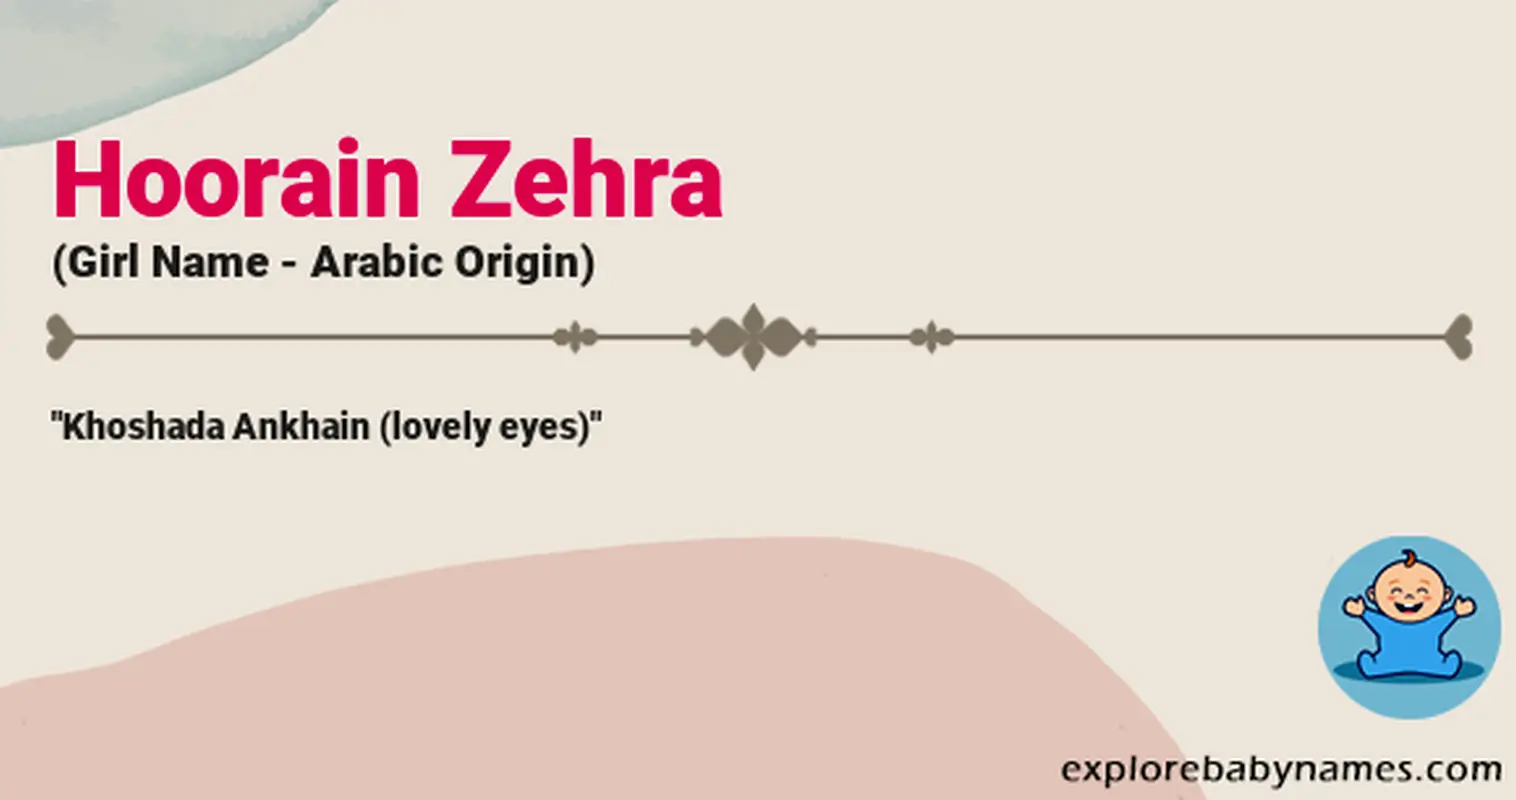 Meaning of Hoorain Zehra